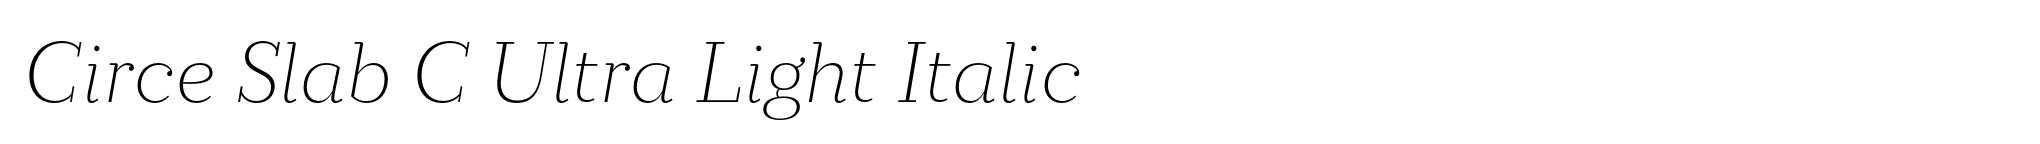 Circe Slab C Ultra Light Italic image